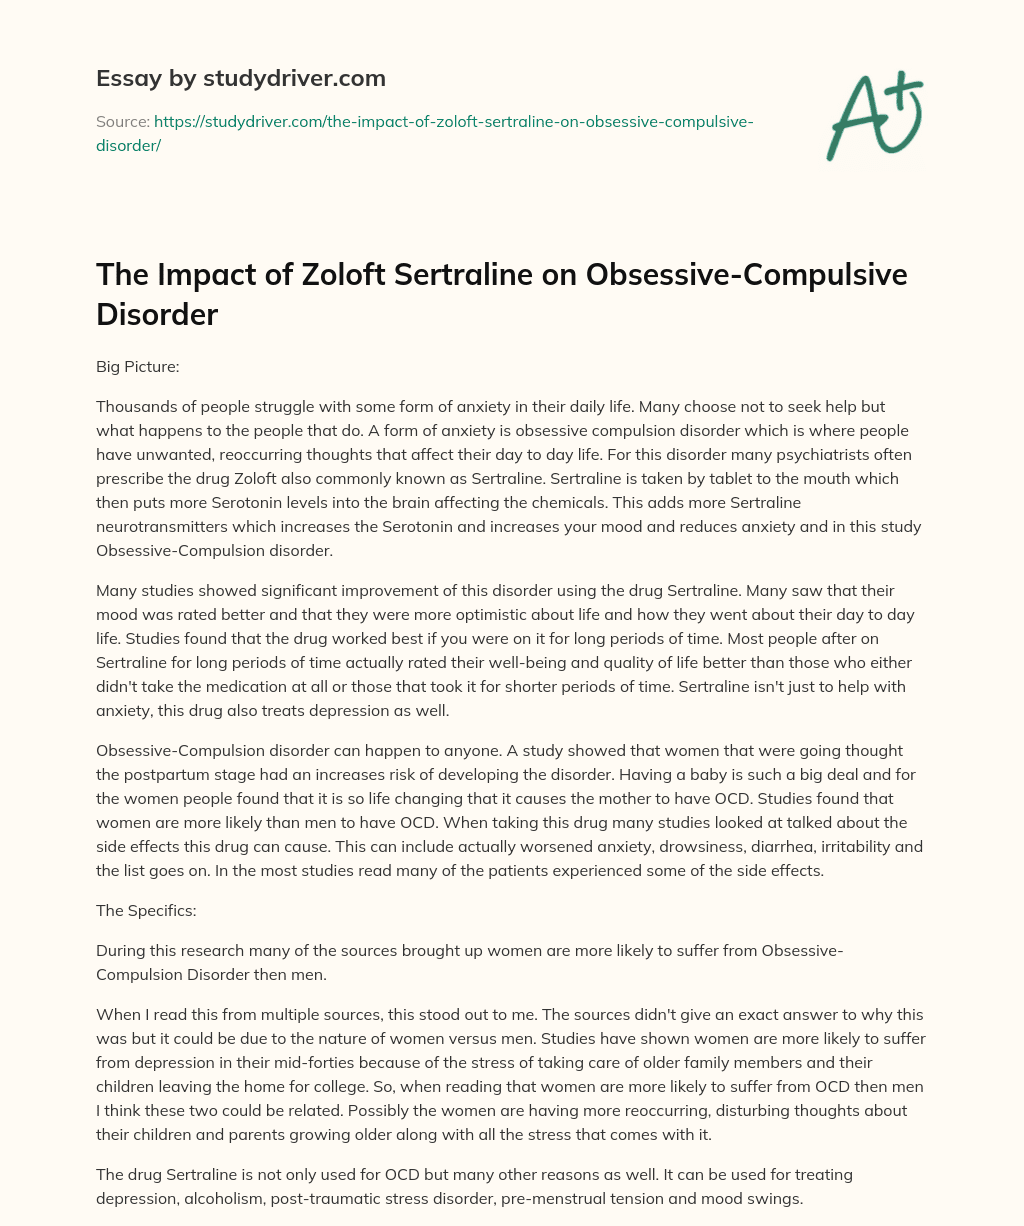 The Impact of Zoloft Sertraline on Obsessive-Compulsive Disorder essay